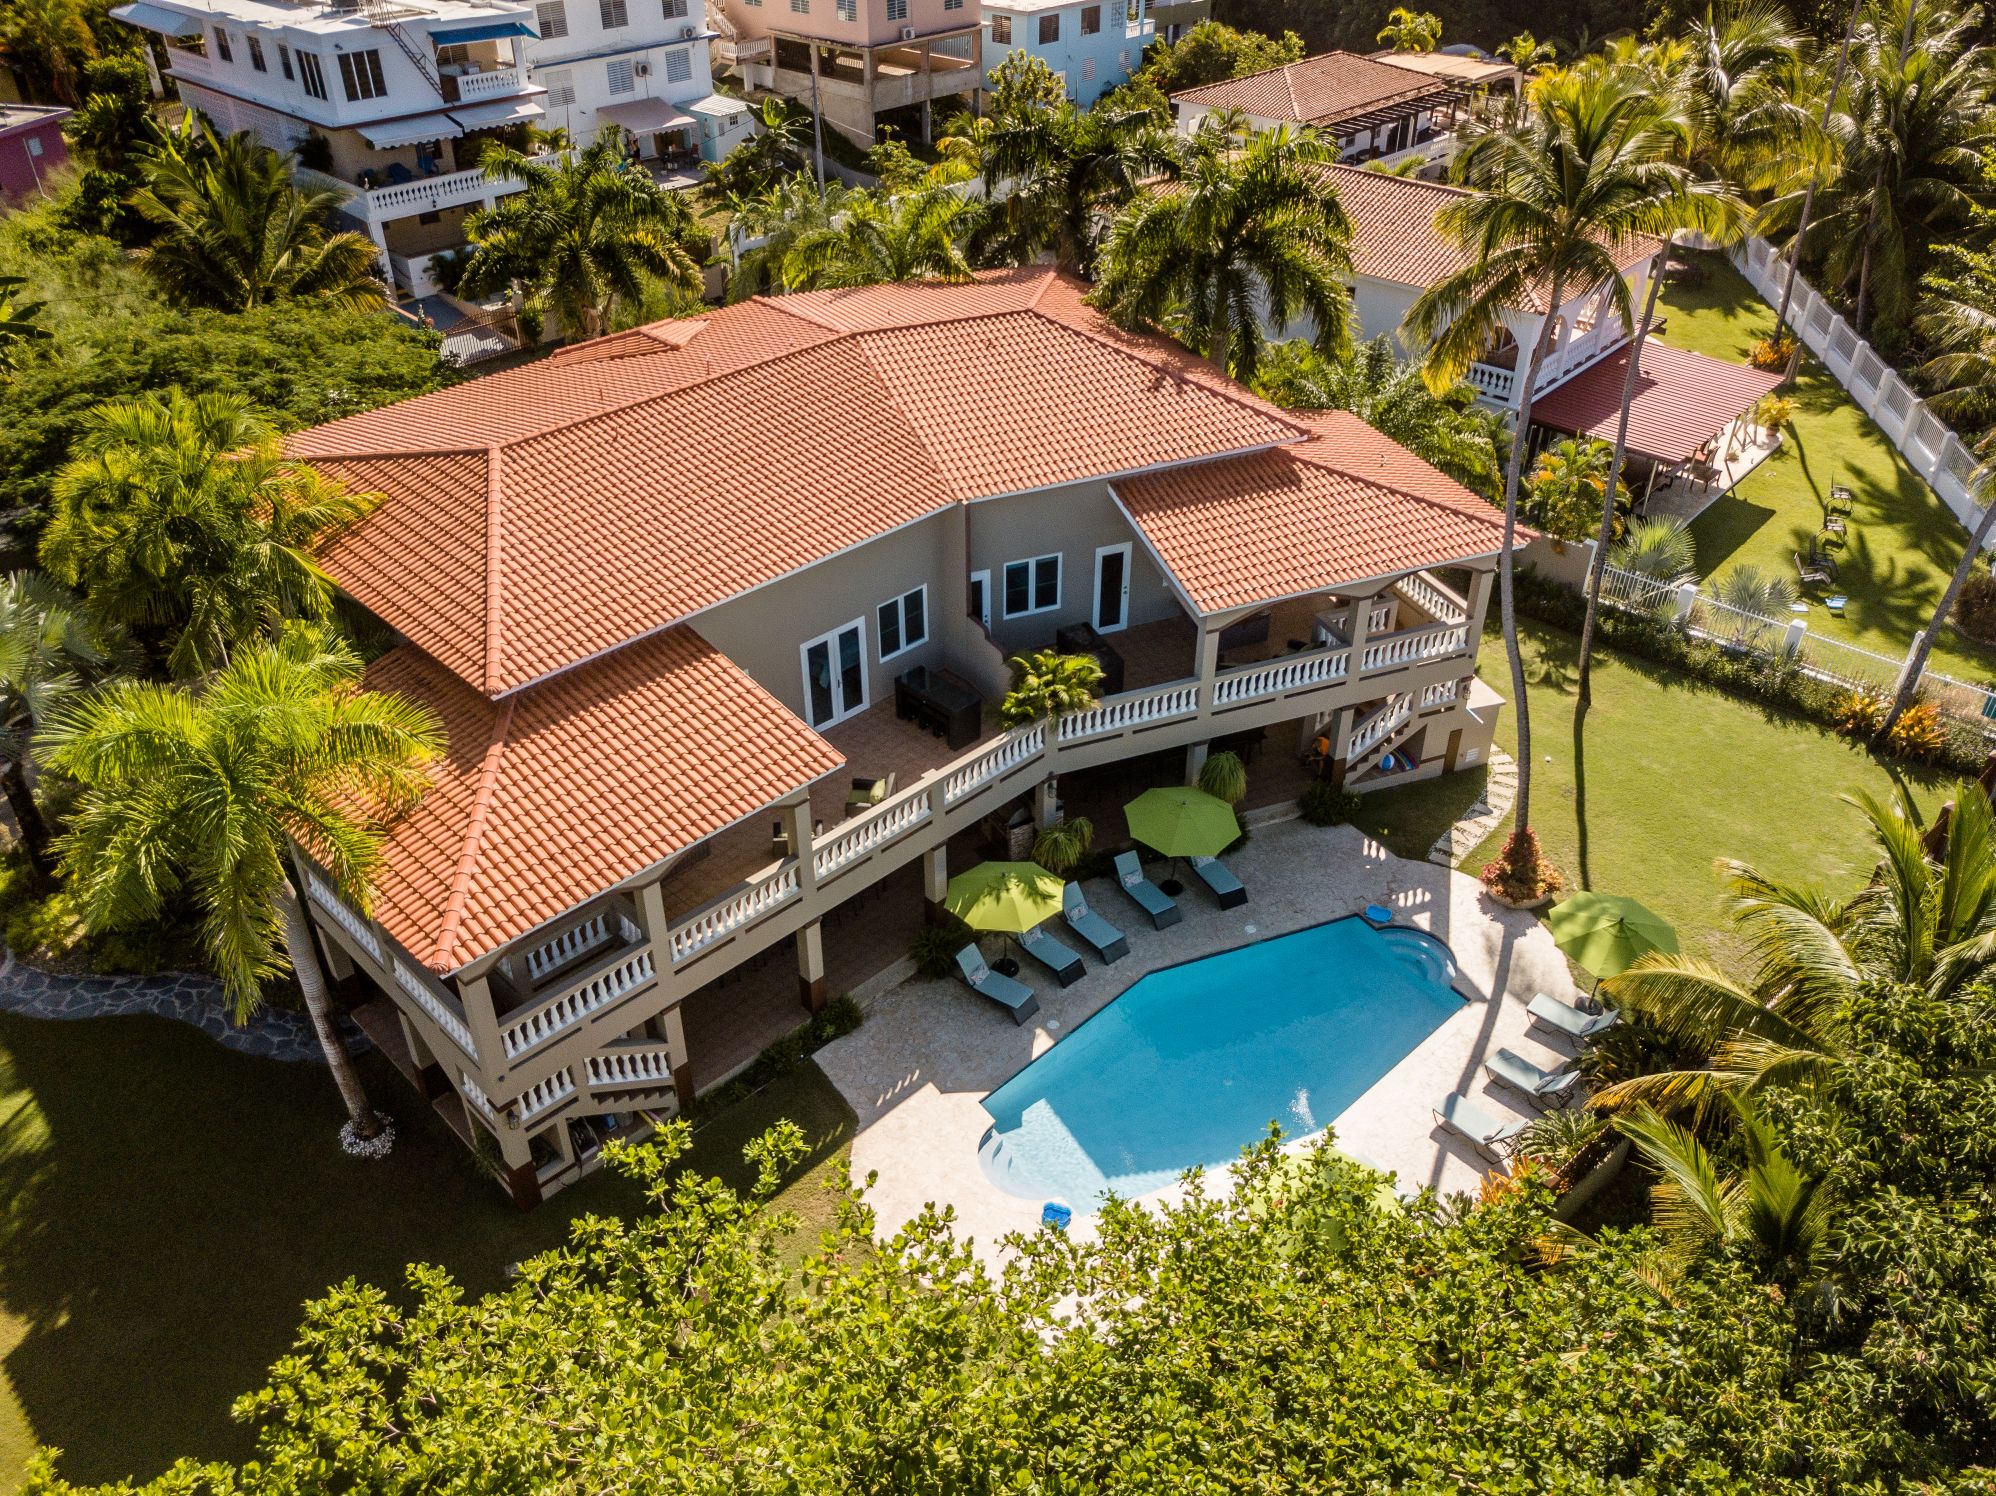 Bird's eye view of Maria's luxury villa in Rincon Puerto Rico.